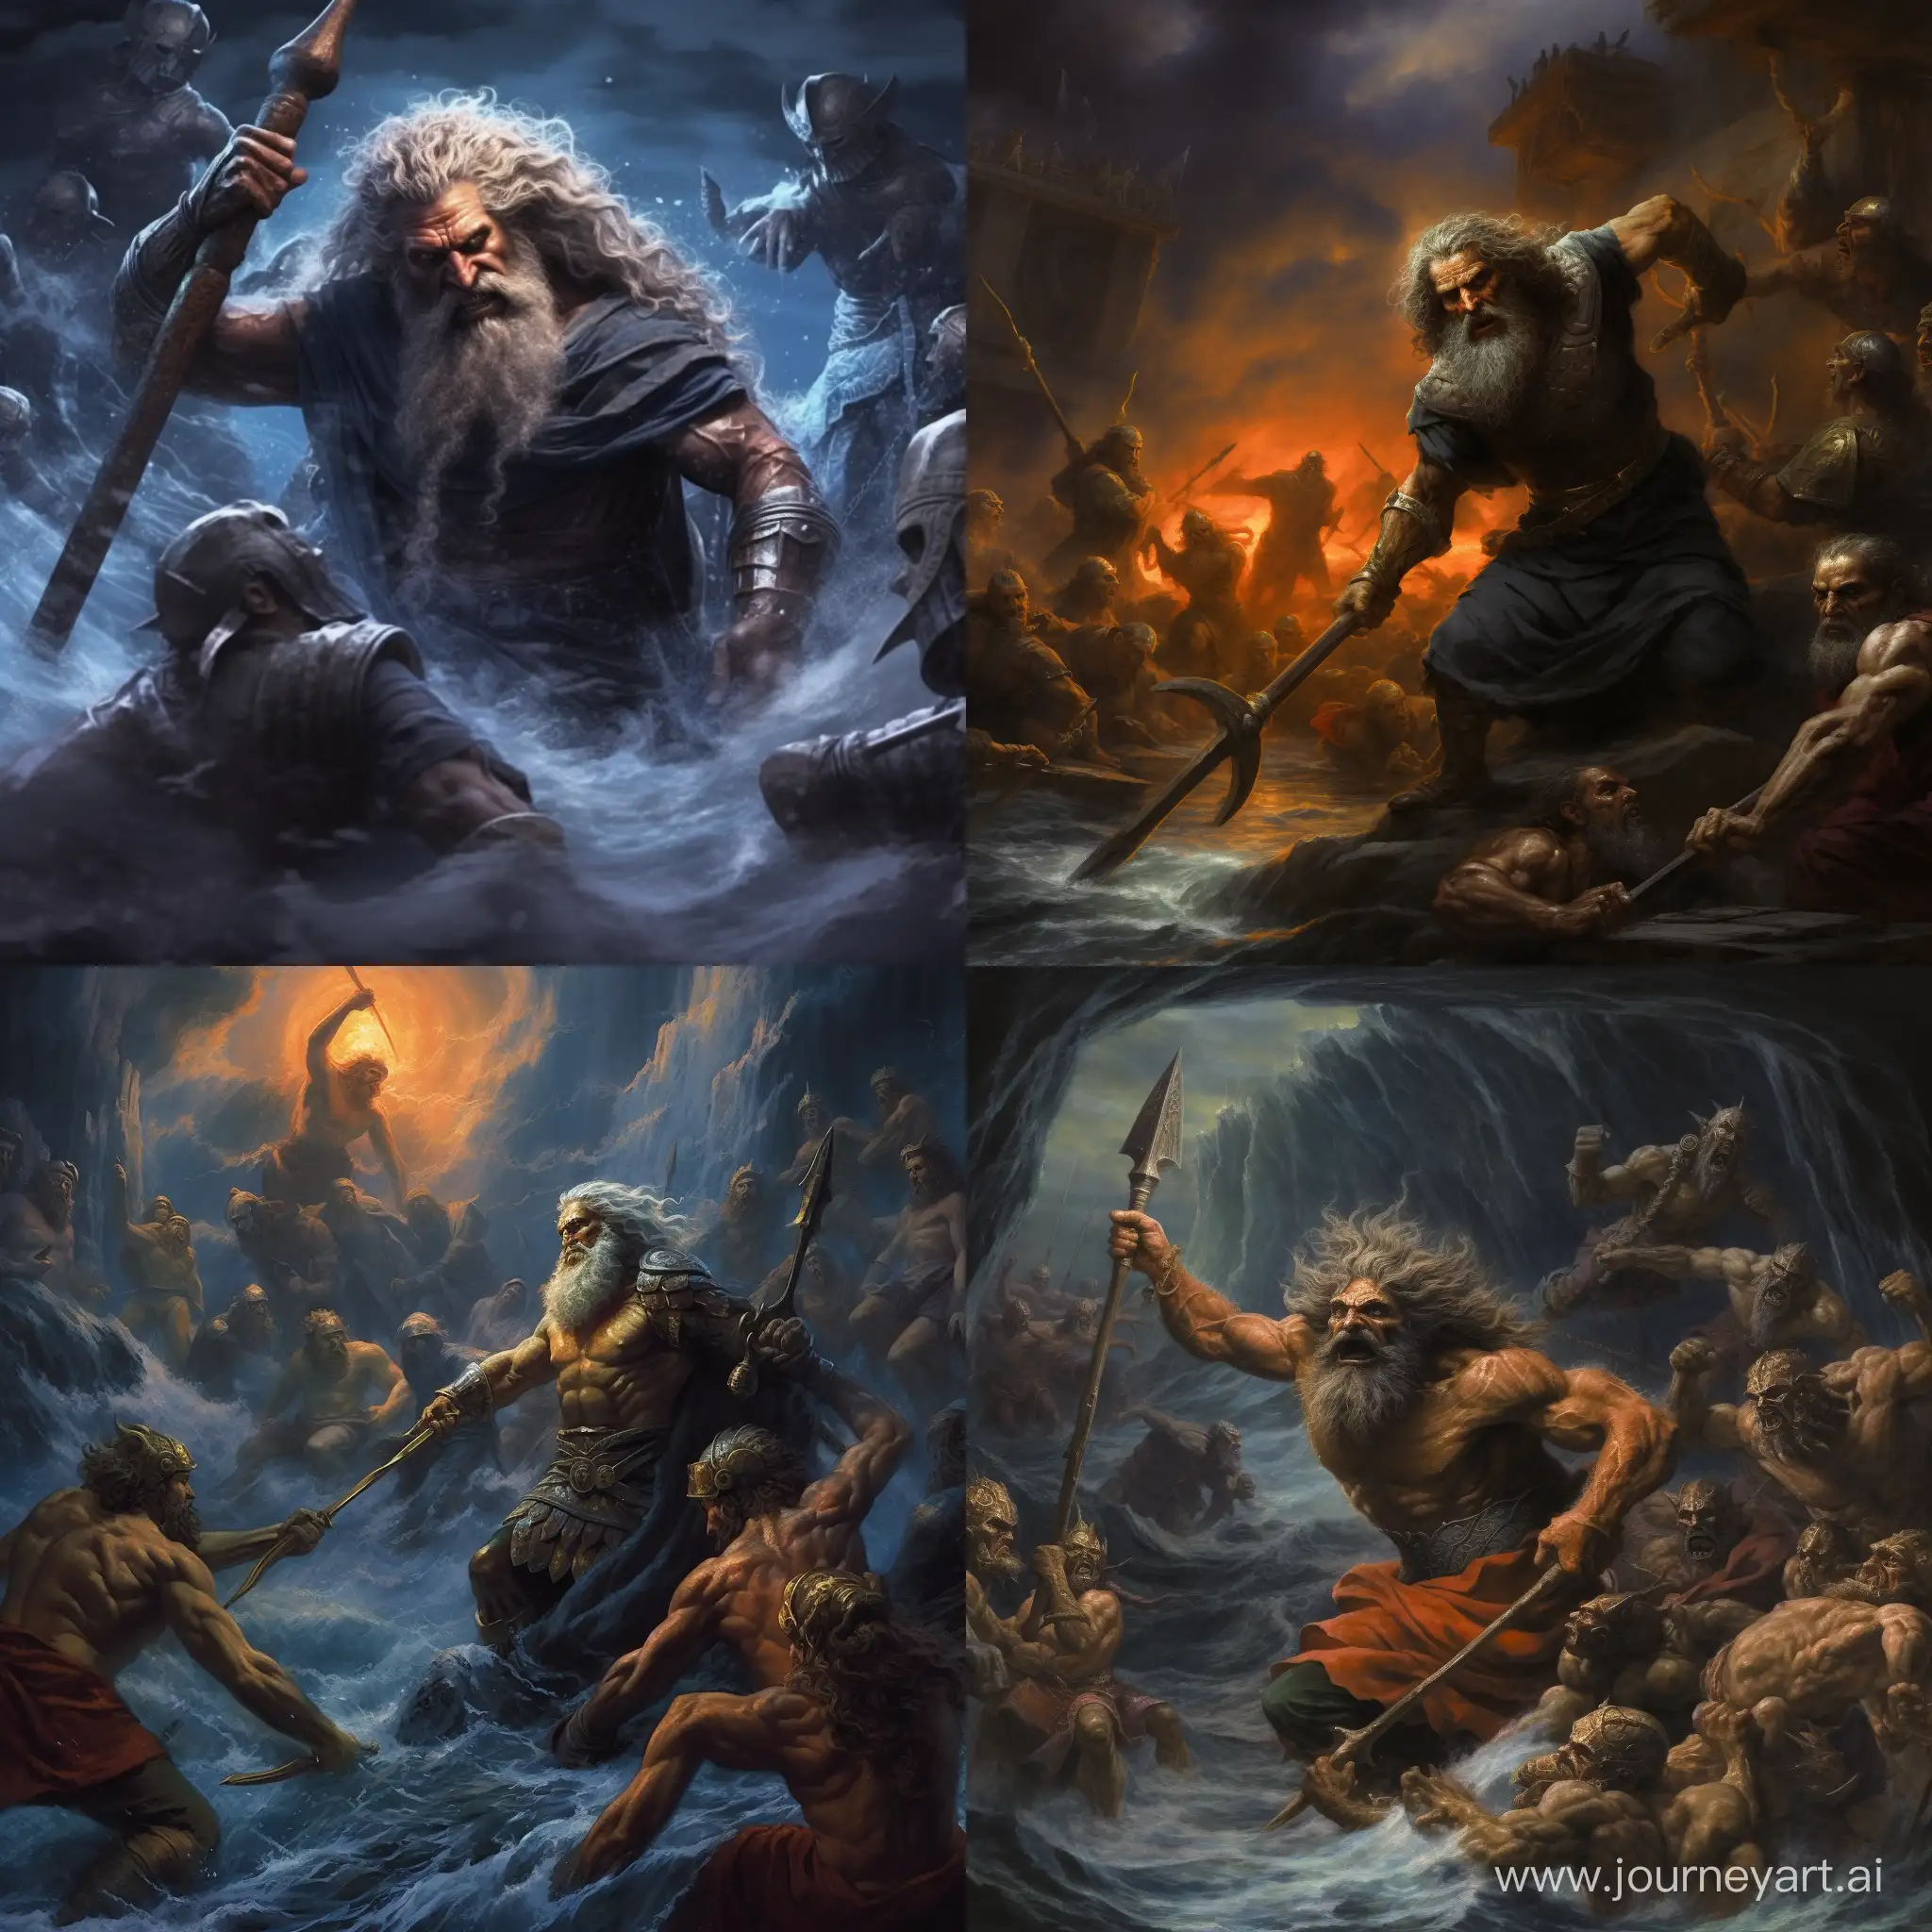 Poseidons-Wrath-Epic-Storm-Confrontation-with-Odysseus-and-Crew